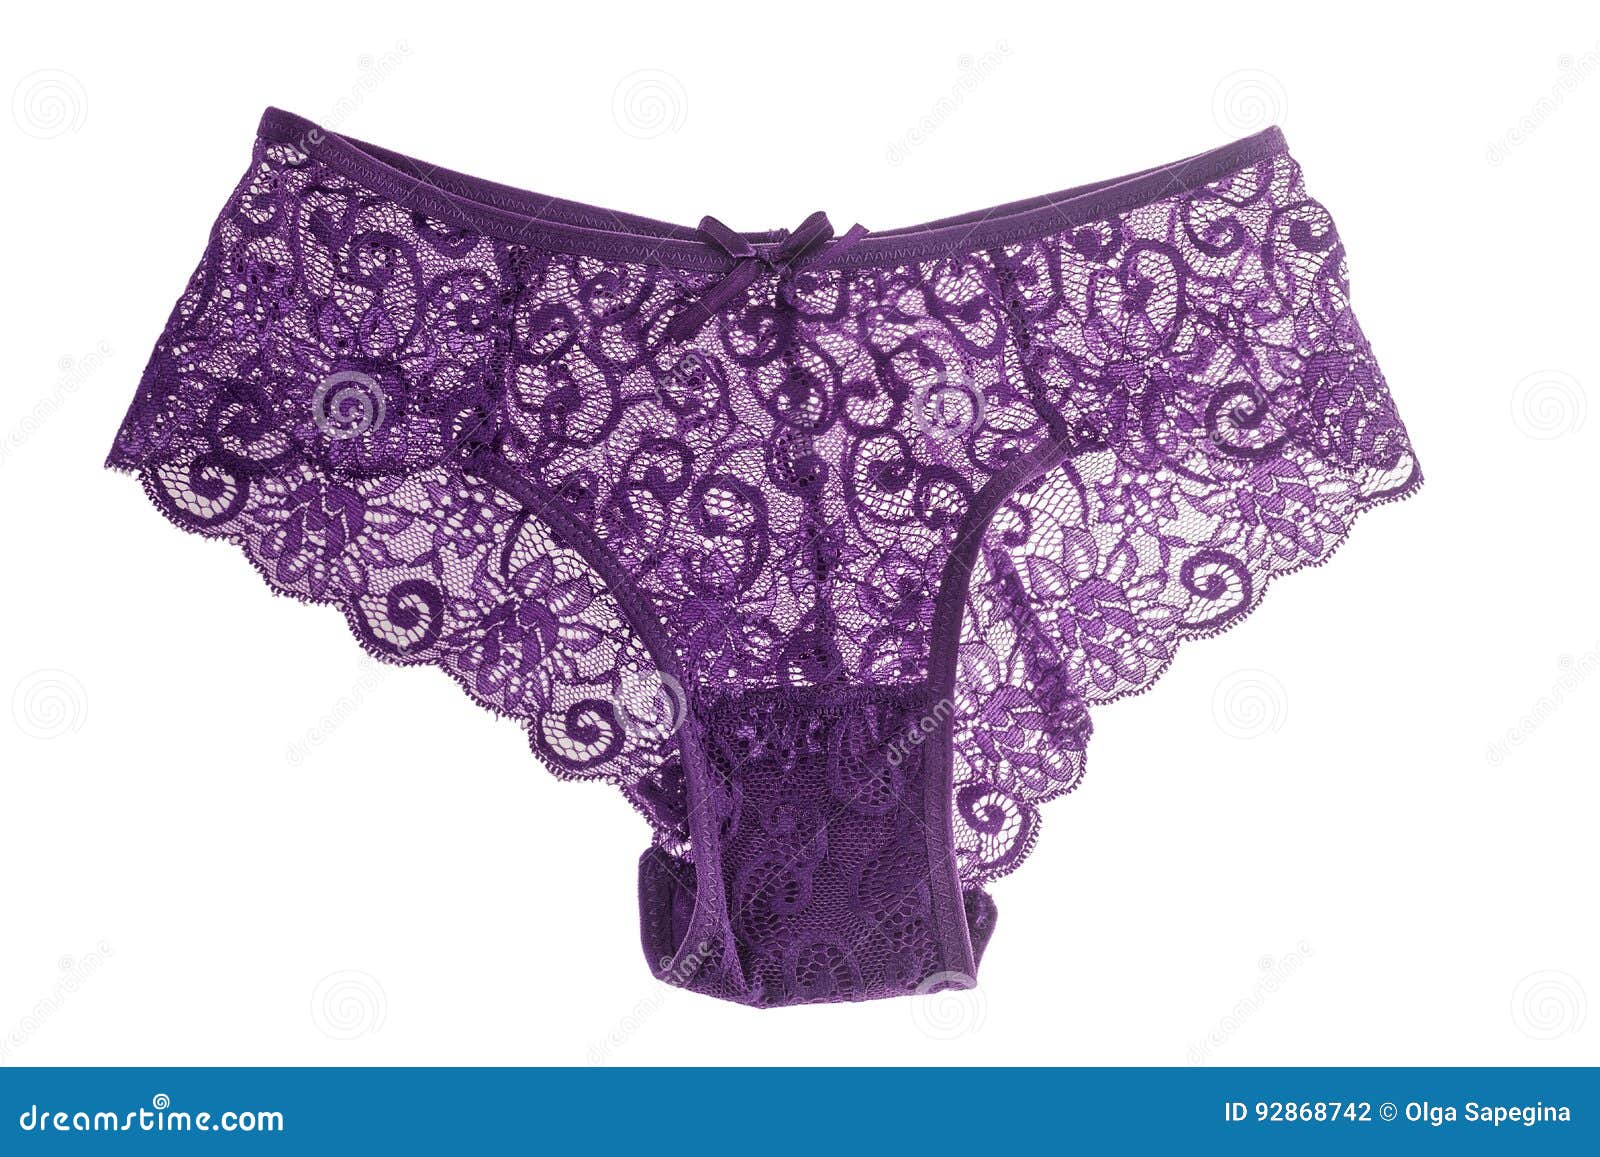 arnel de jesus add purple panty pics photo